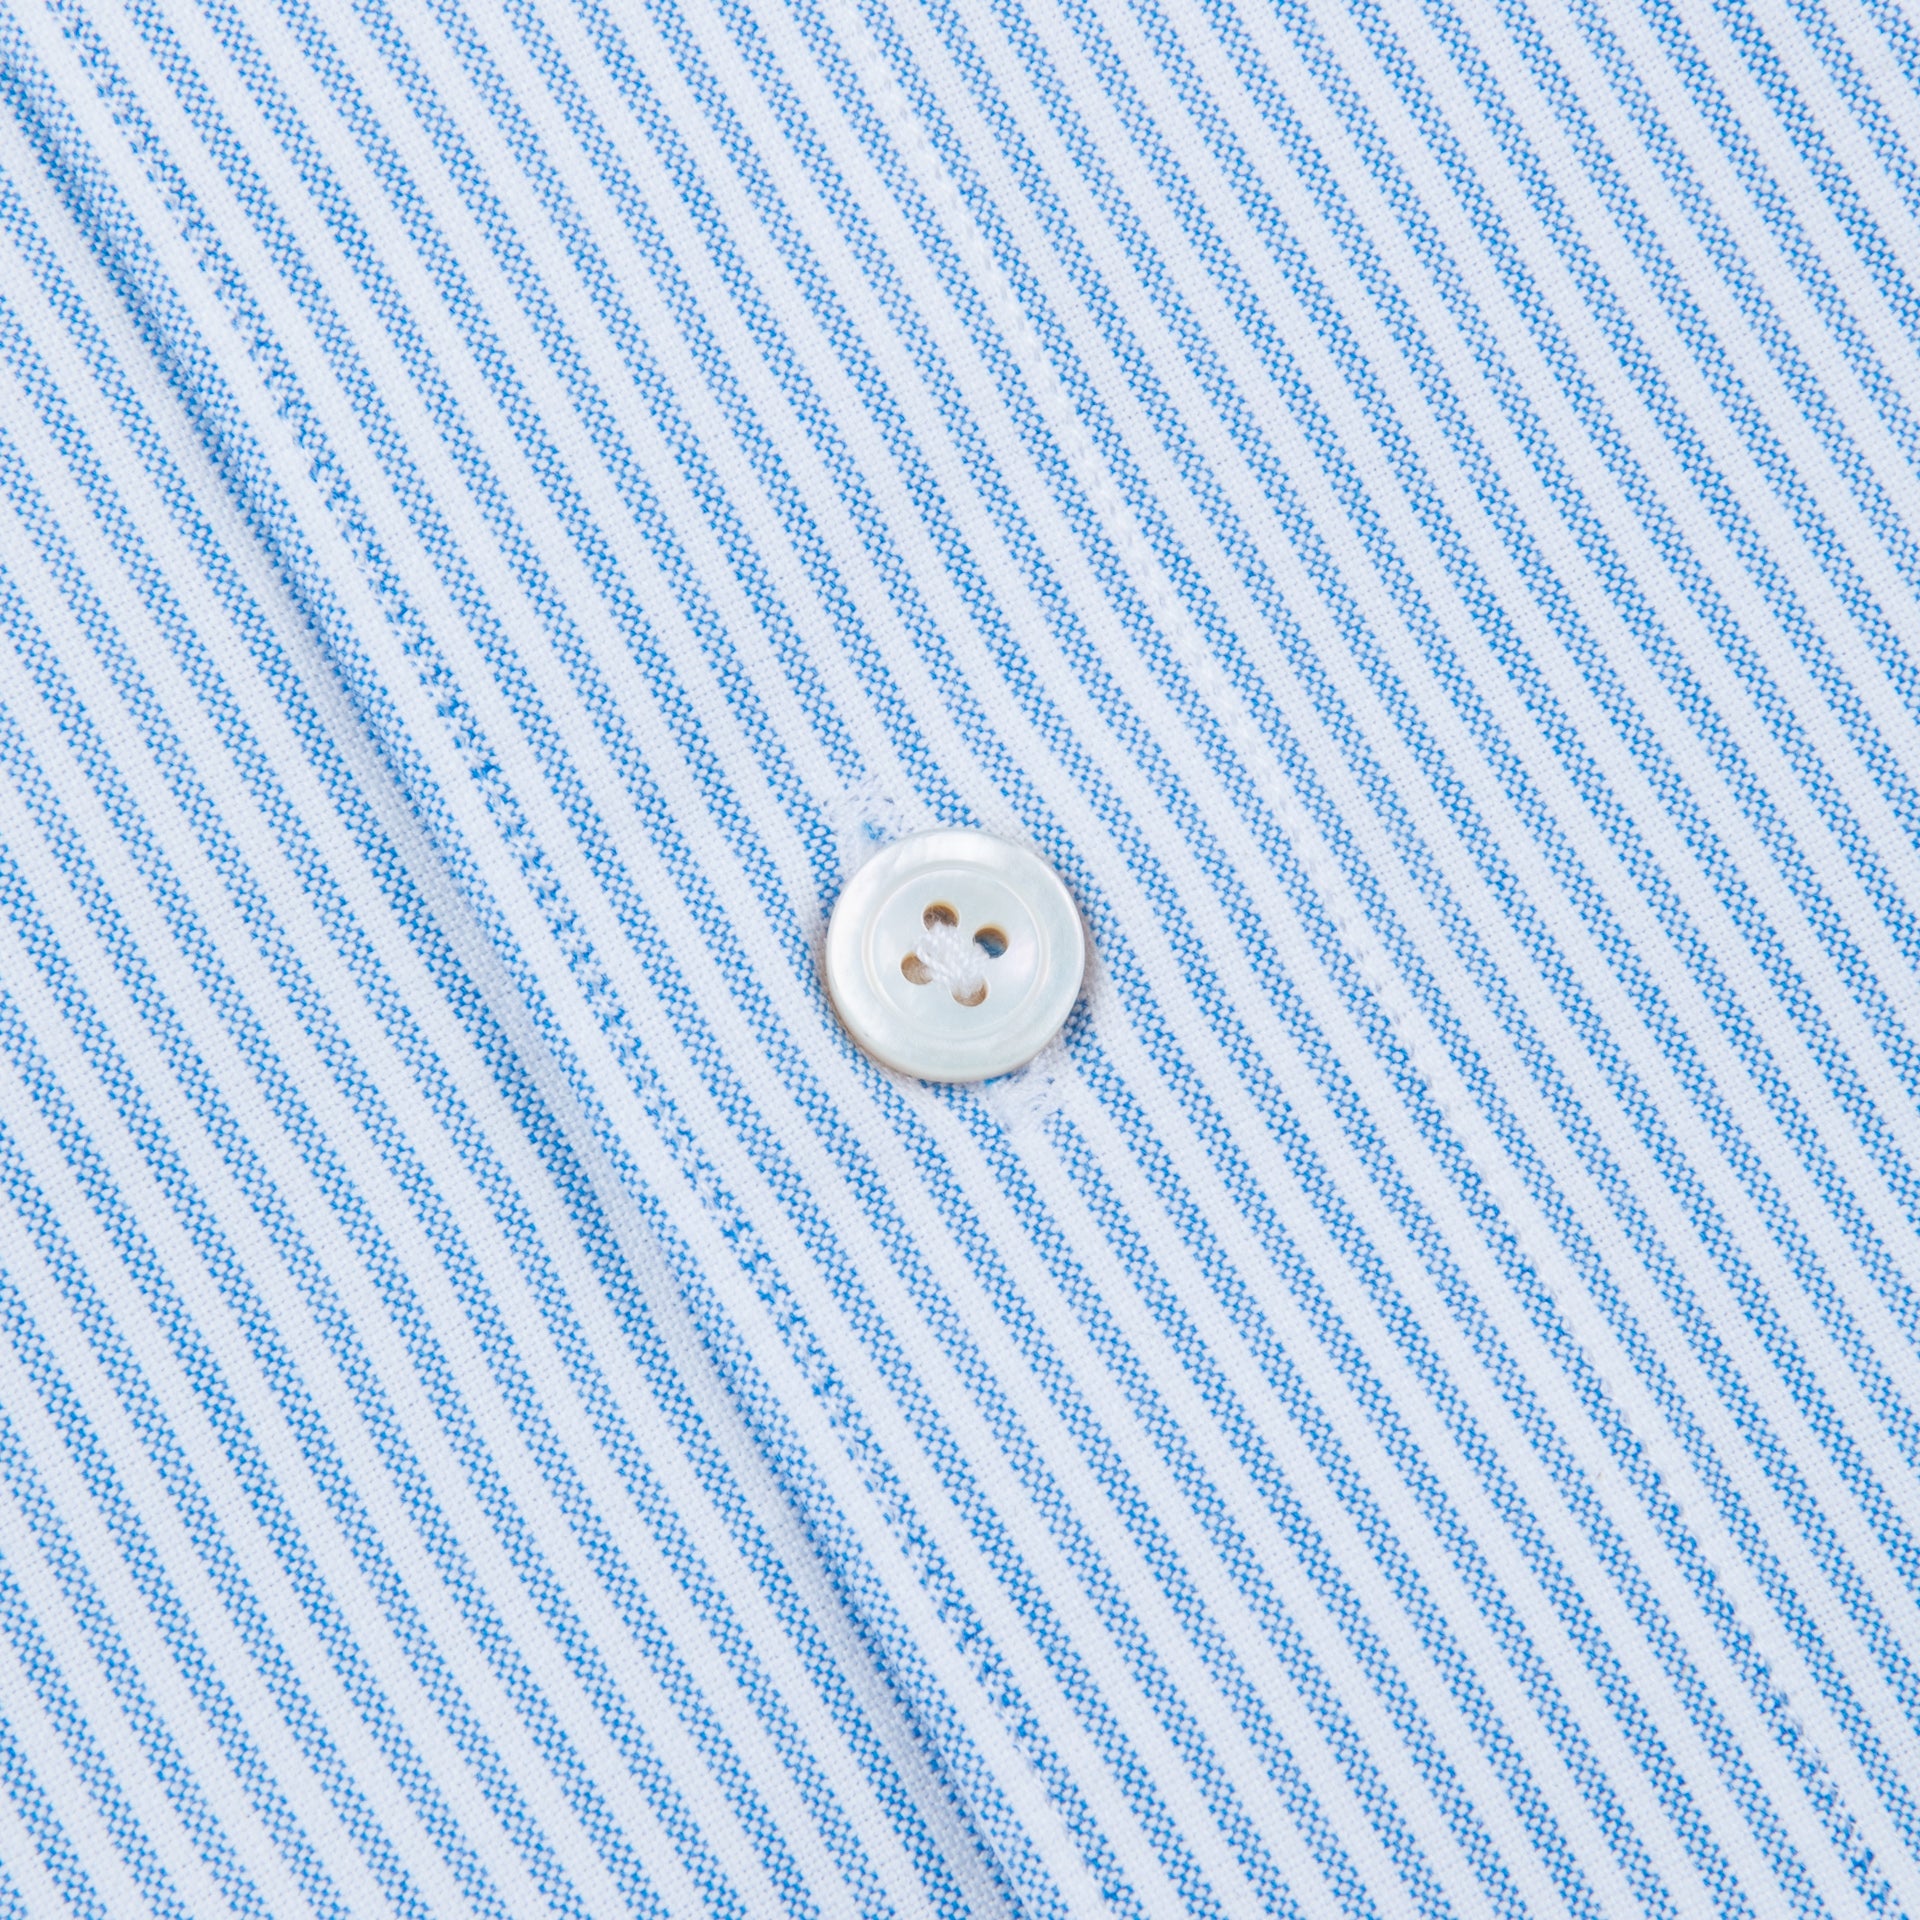 Finamore Gaeta Shirt Pinpoint Oxford Sergio Collar Blue Stripe